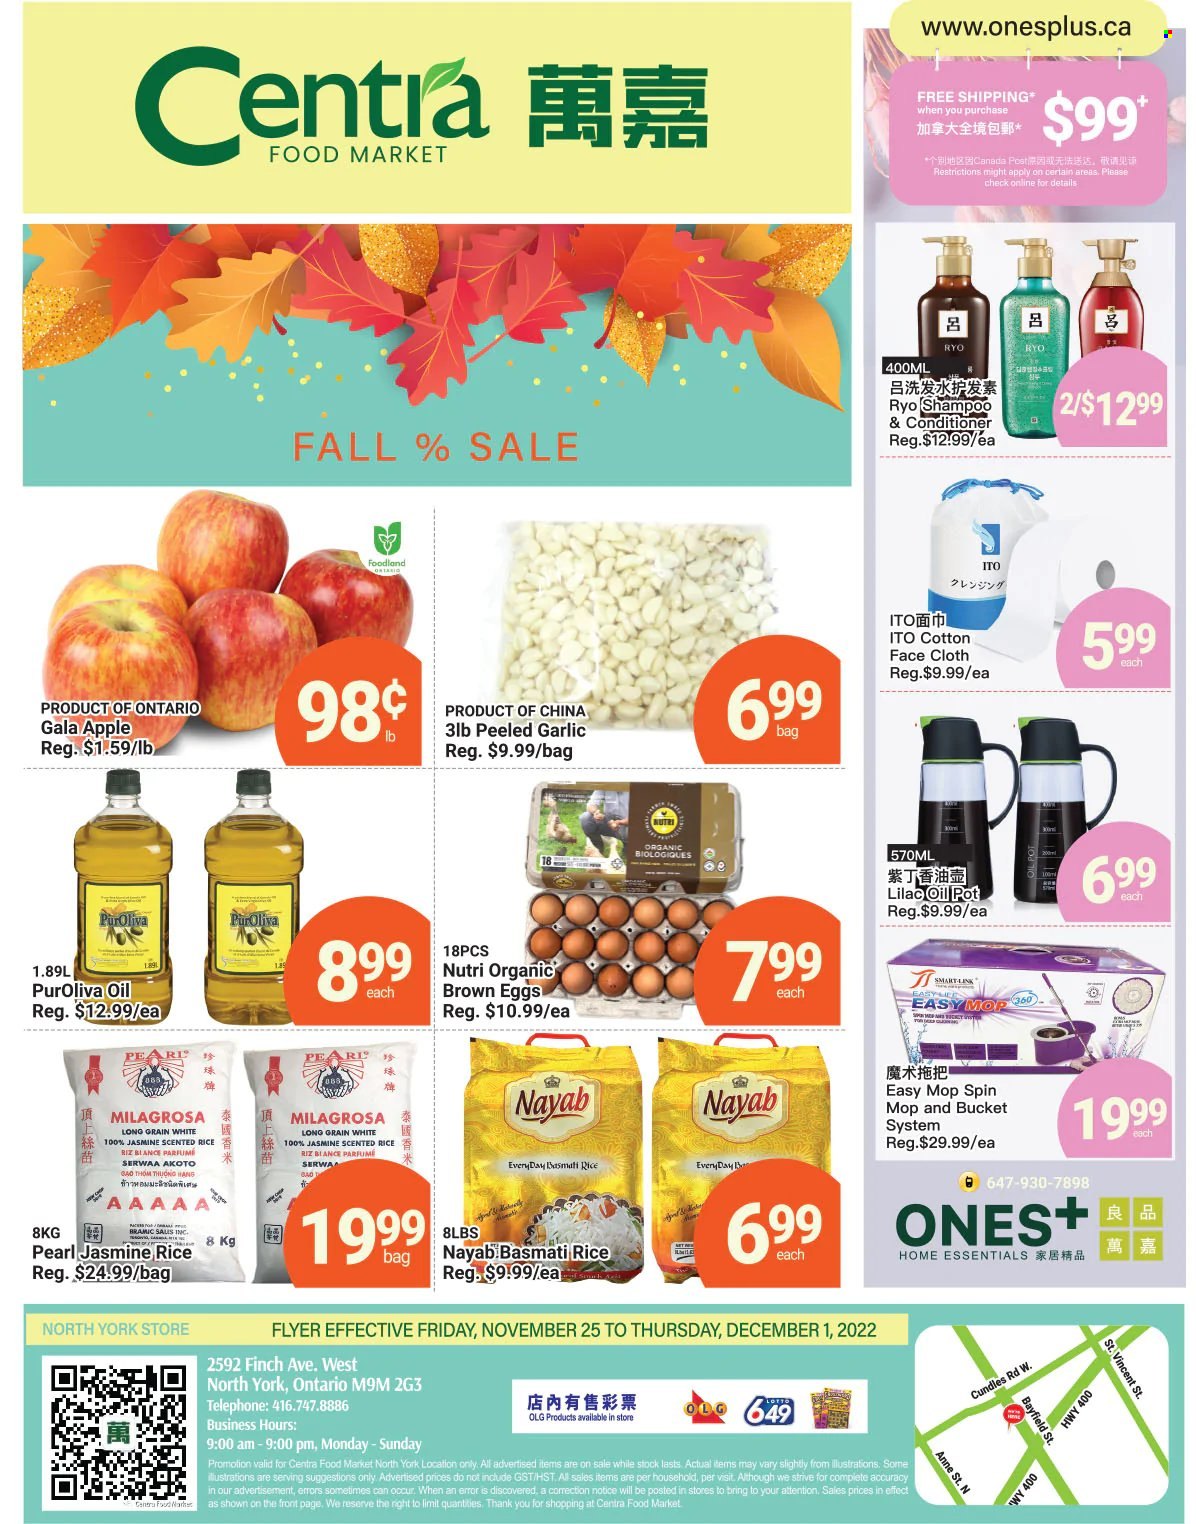 Centra Food Market Flyer - November 25, 2022 - December 01, 2022 - Sales products - garlic, Gala apple, eggs, basmati rice, rice, jasmine rice, oil, conditioner, bag, spin mop, mop, pot, shampoo. Page 1.